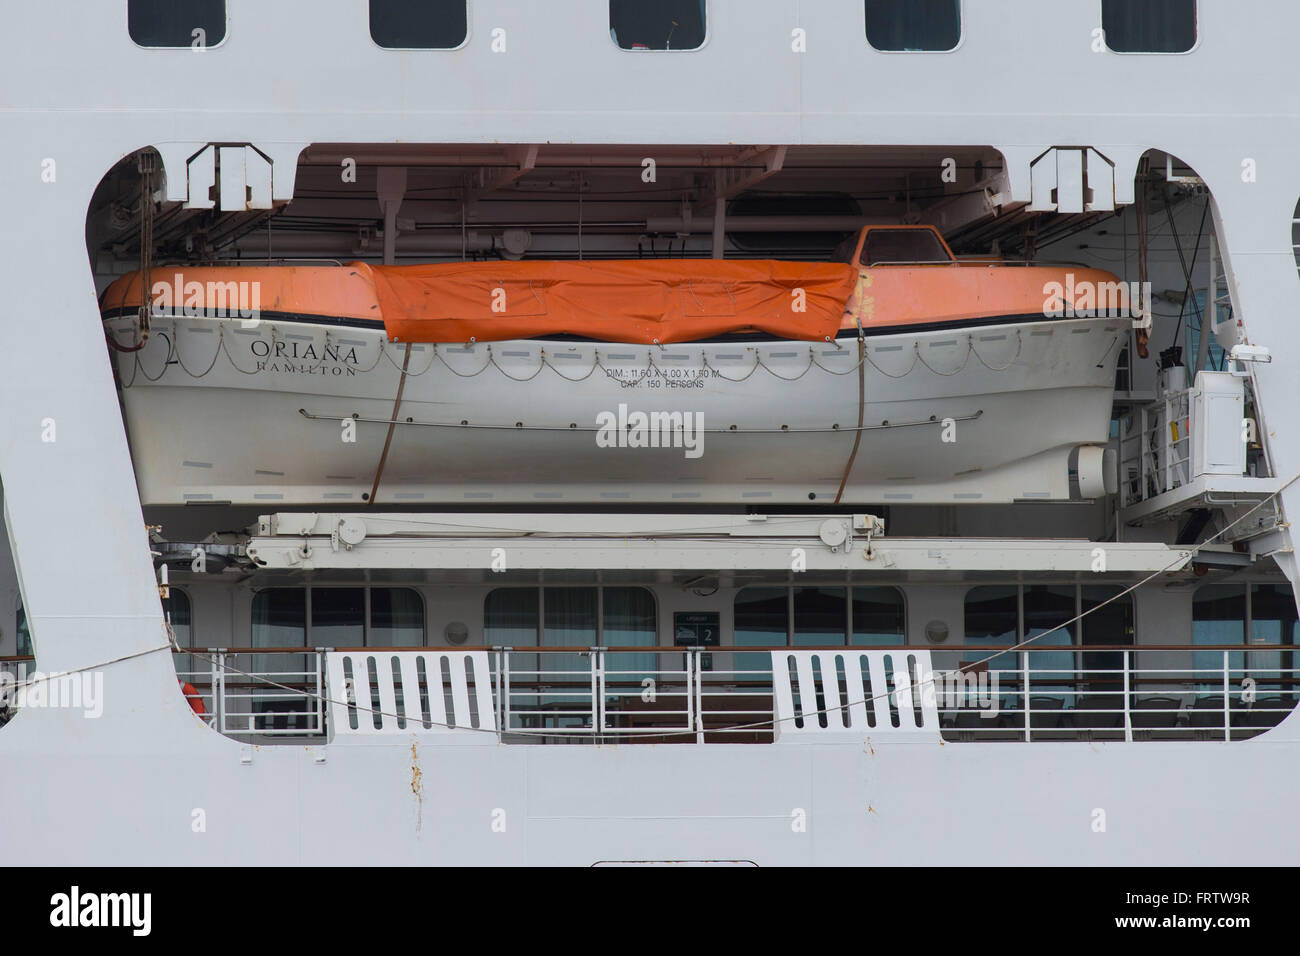 A lifeboat on board P&O's Oriana cruise ship. Stock Photo